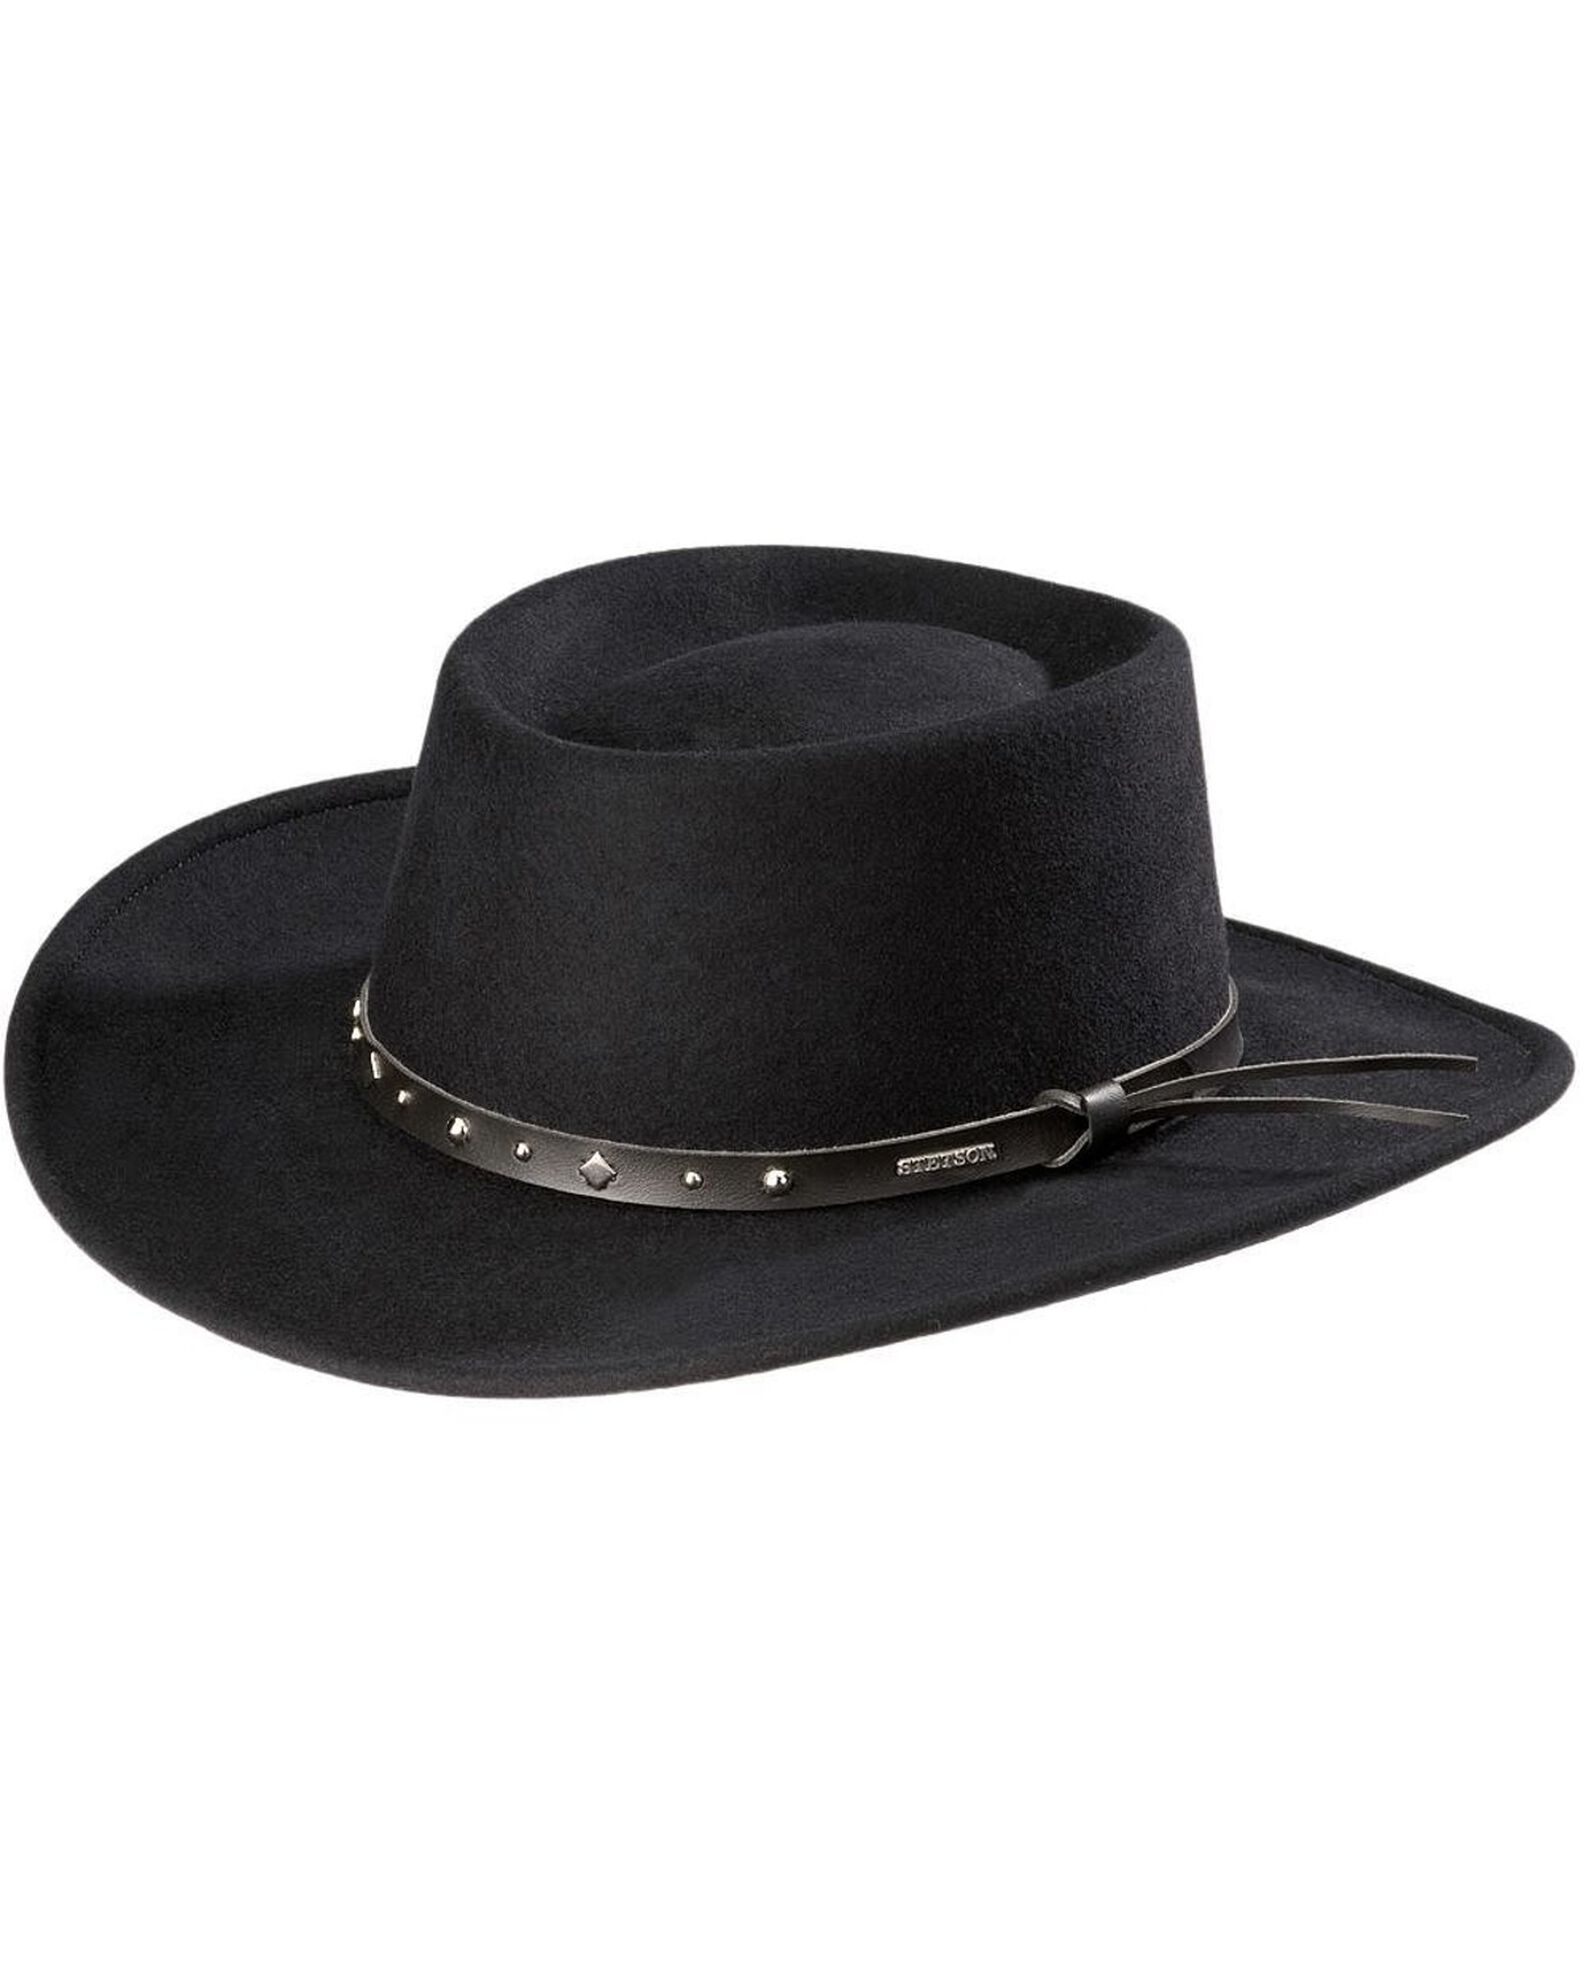 Stetson Men's Black Hawk Crushable Wool Felt Gambler Hat - Country Outfitter